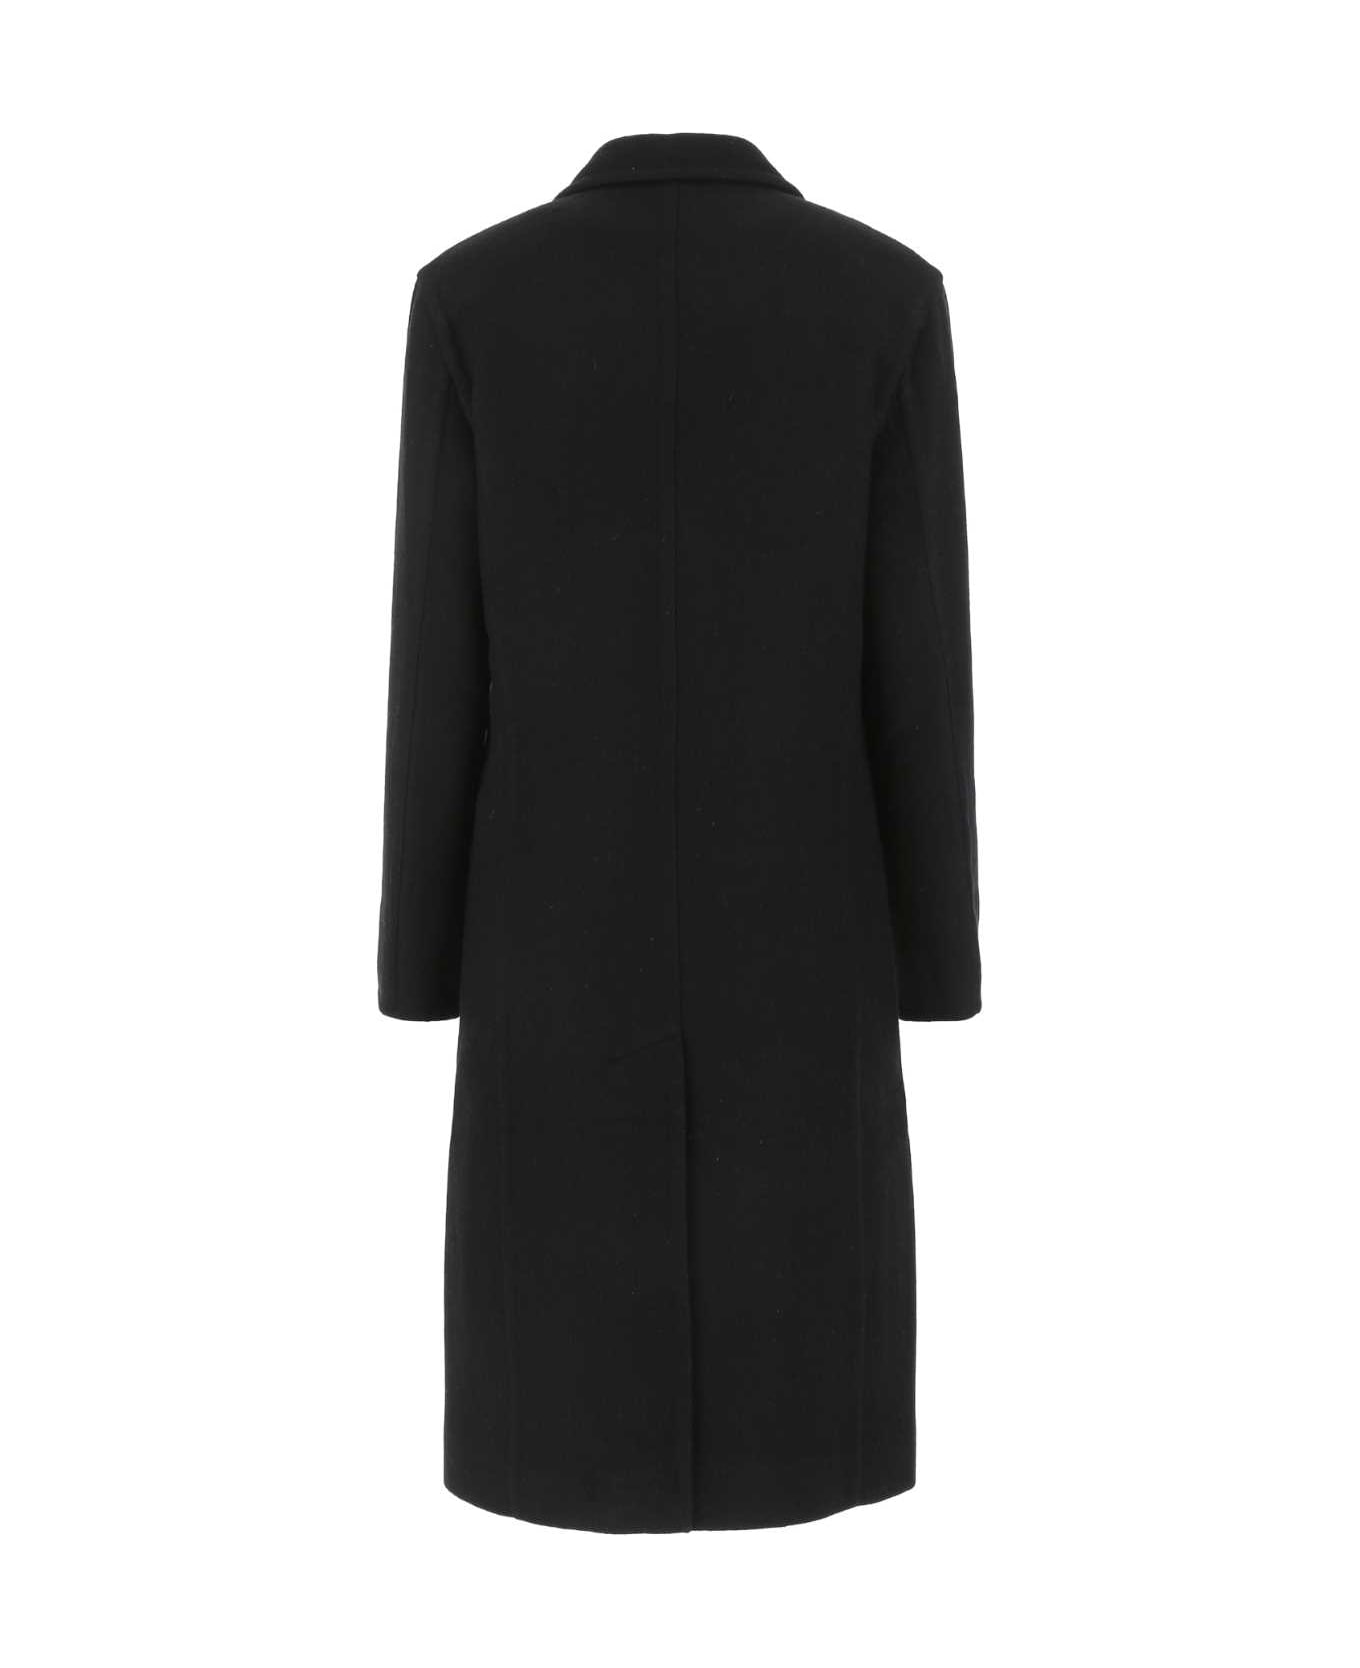 Givenchy Black Wool Blend Coat - 002 コート